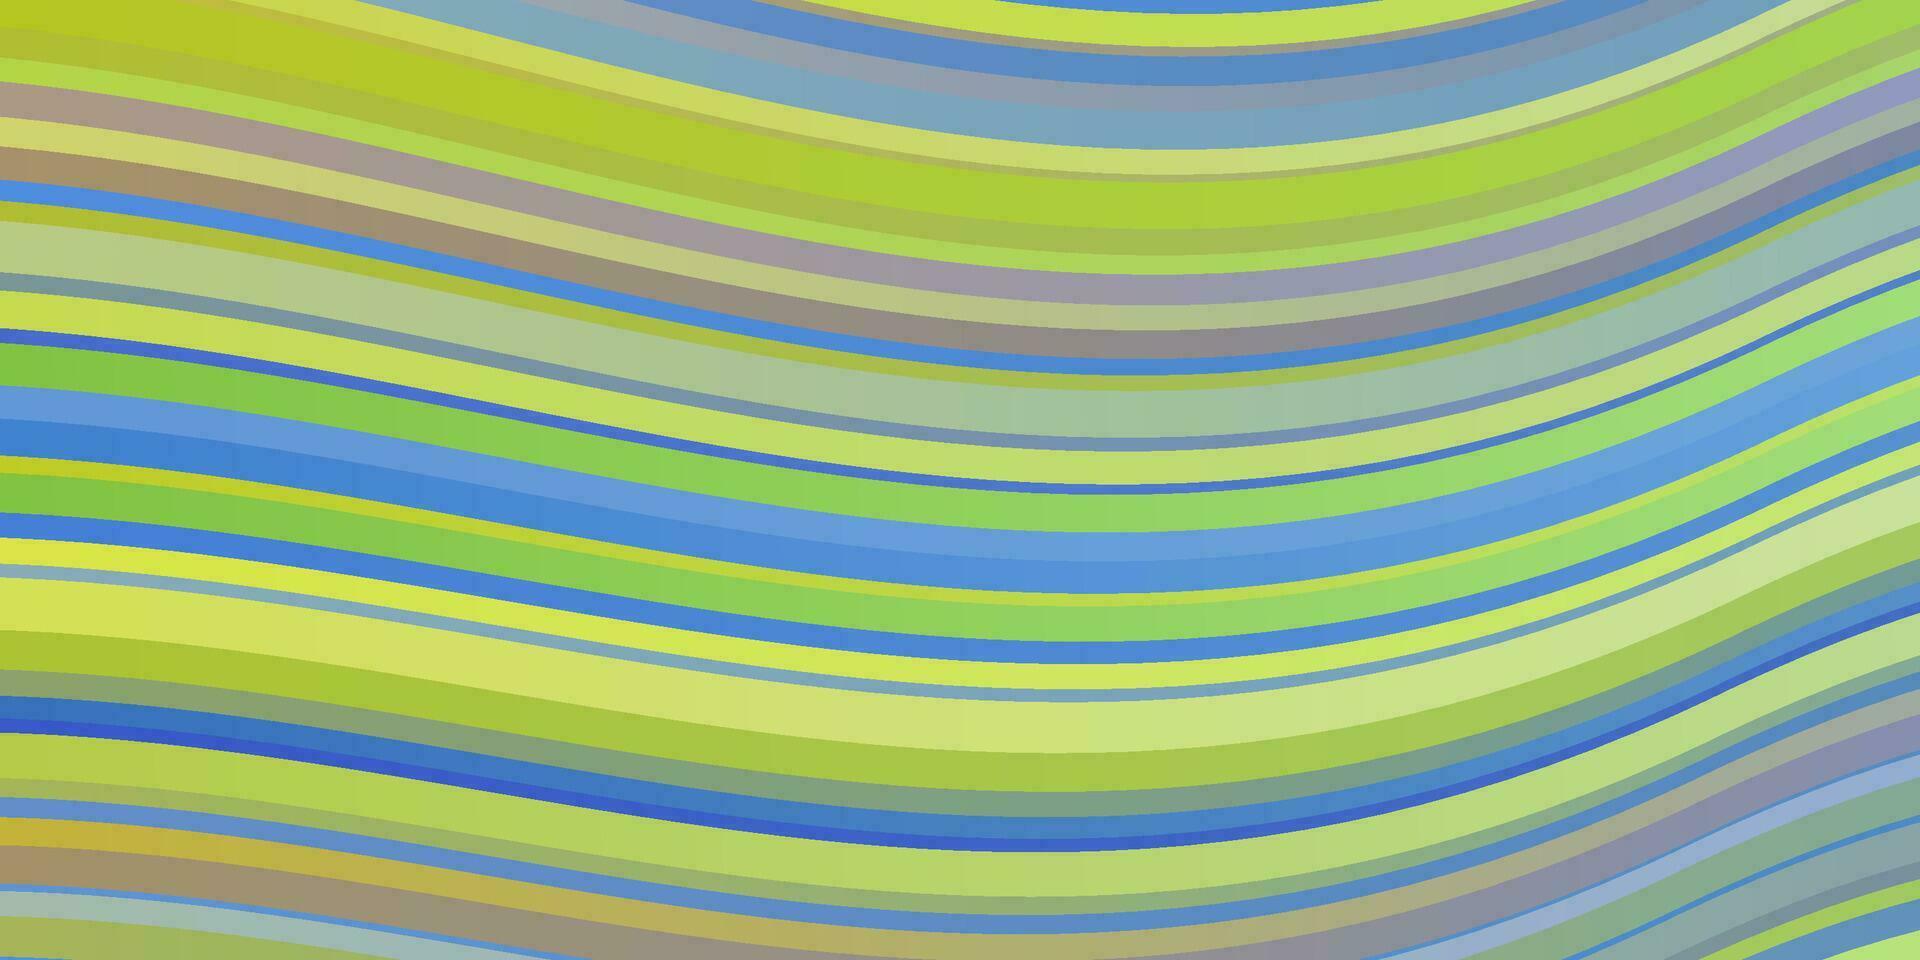 textura de vector multicolor claro con arco circular.